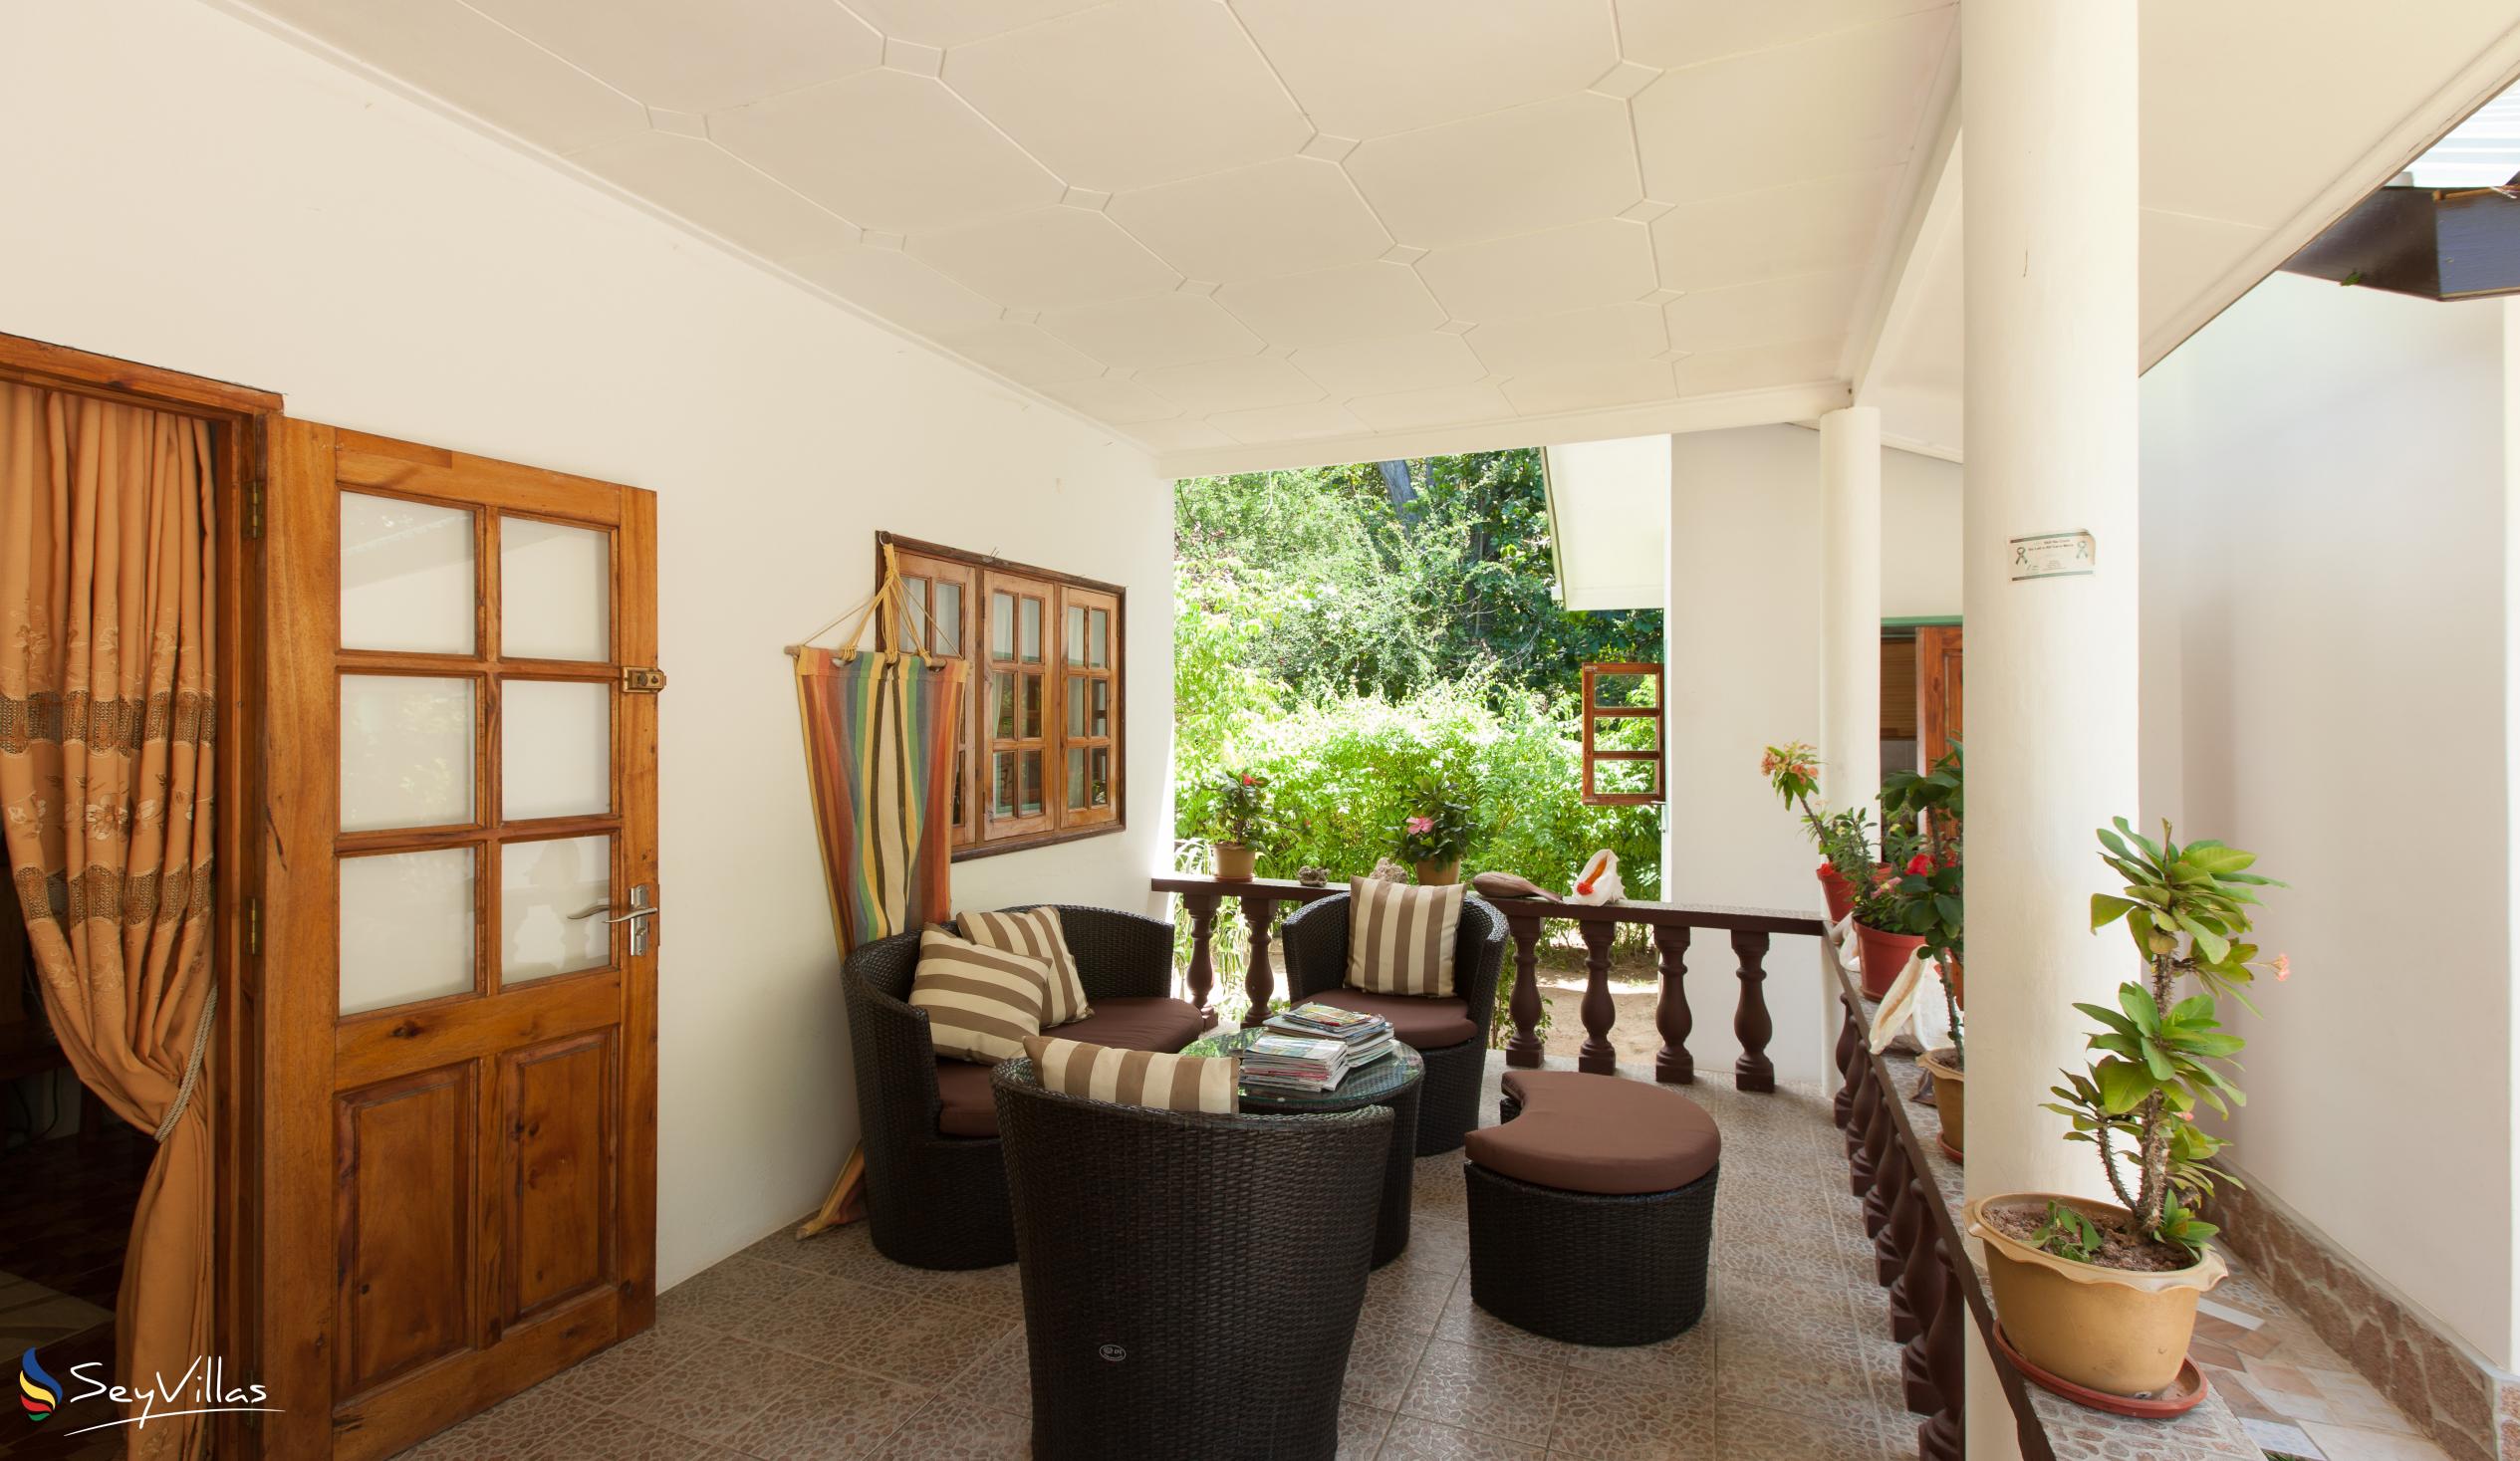 Photo 49: Tannette's Villa - Indoor area - La Digue (Seychelles)